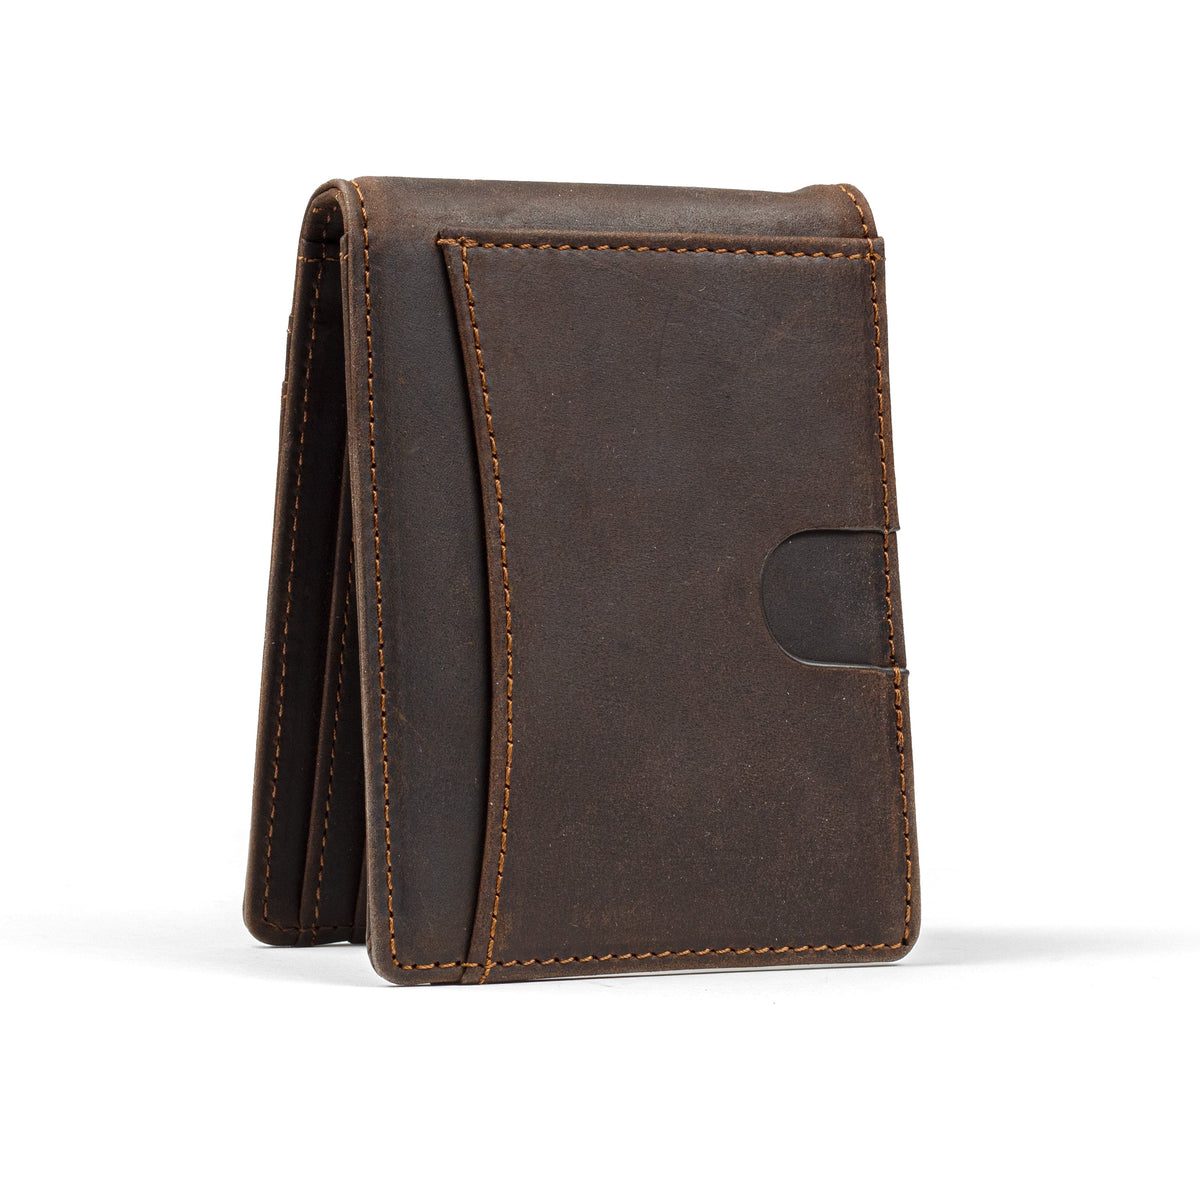 Monetial, AirTag Premium Leather Wallet, RFID Blocking